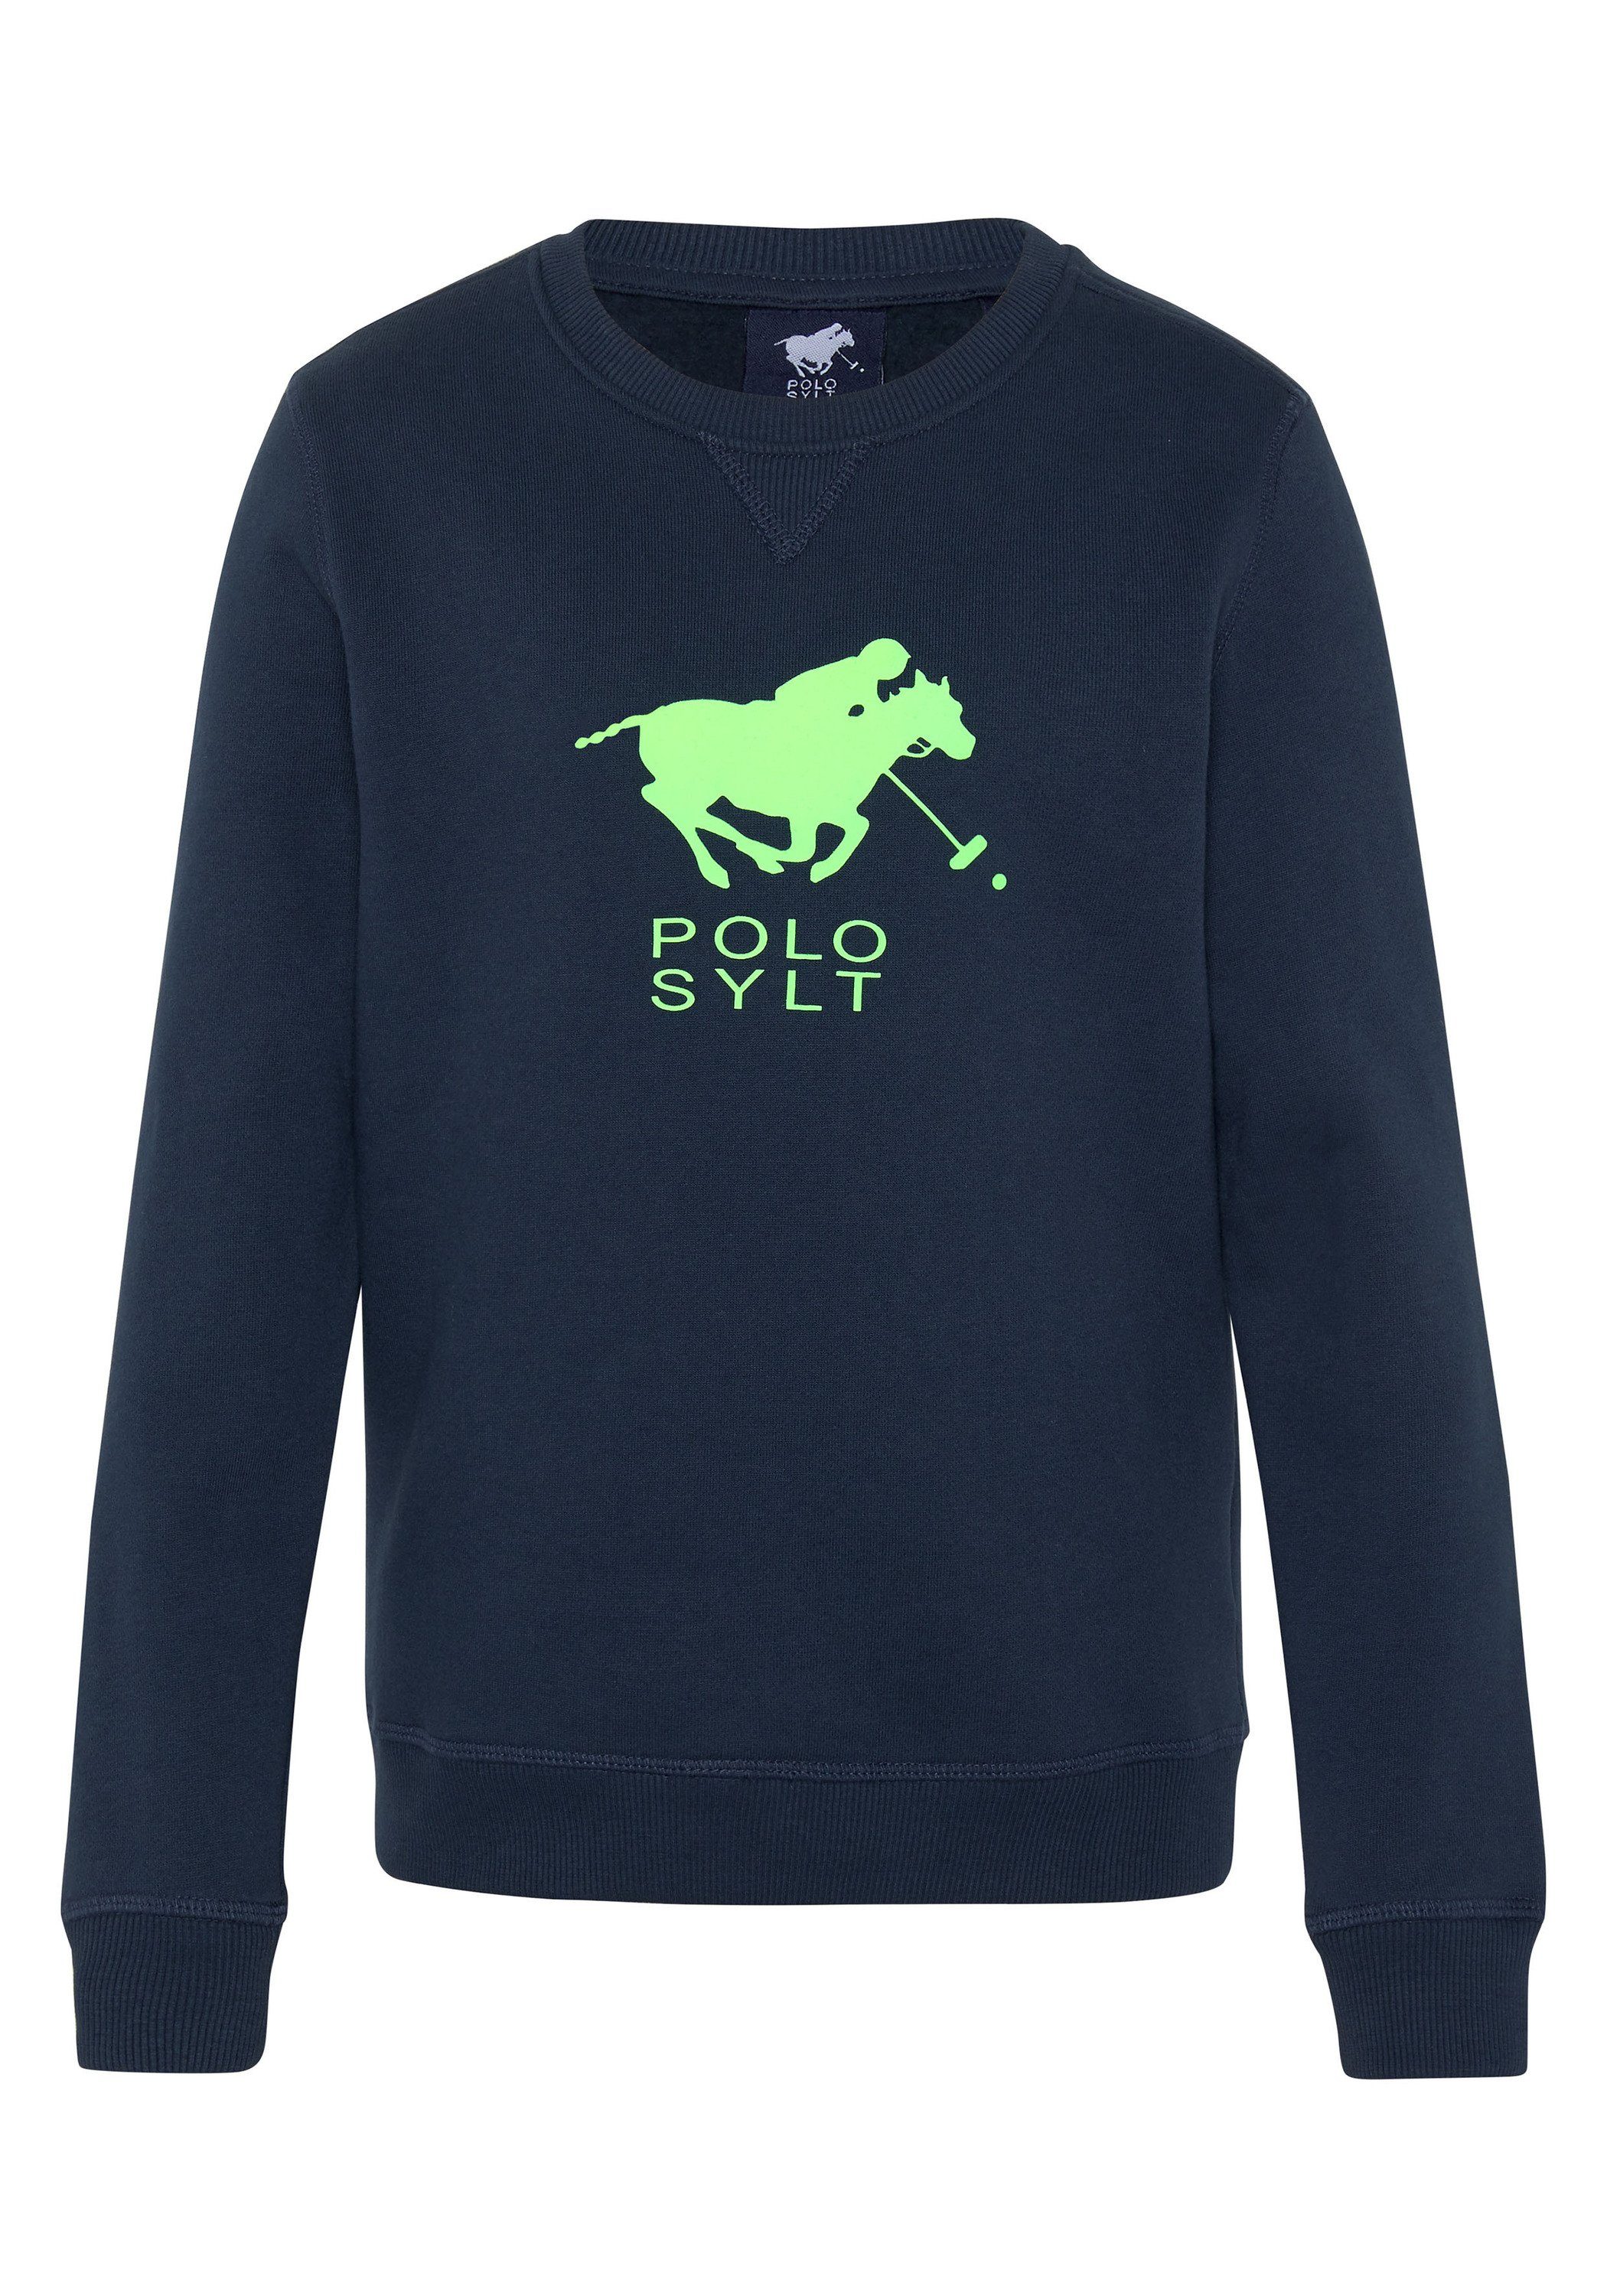 Polo Sylt Sweatshirt mit Label-Print Total Eclipse